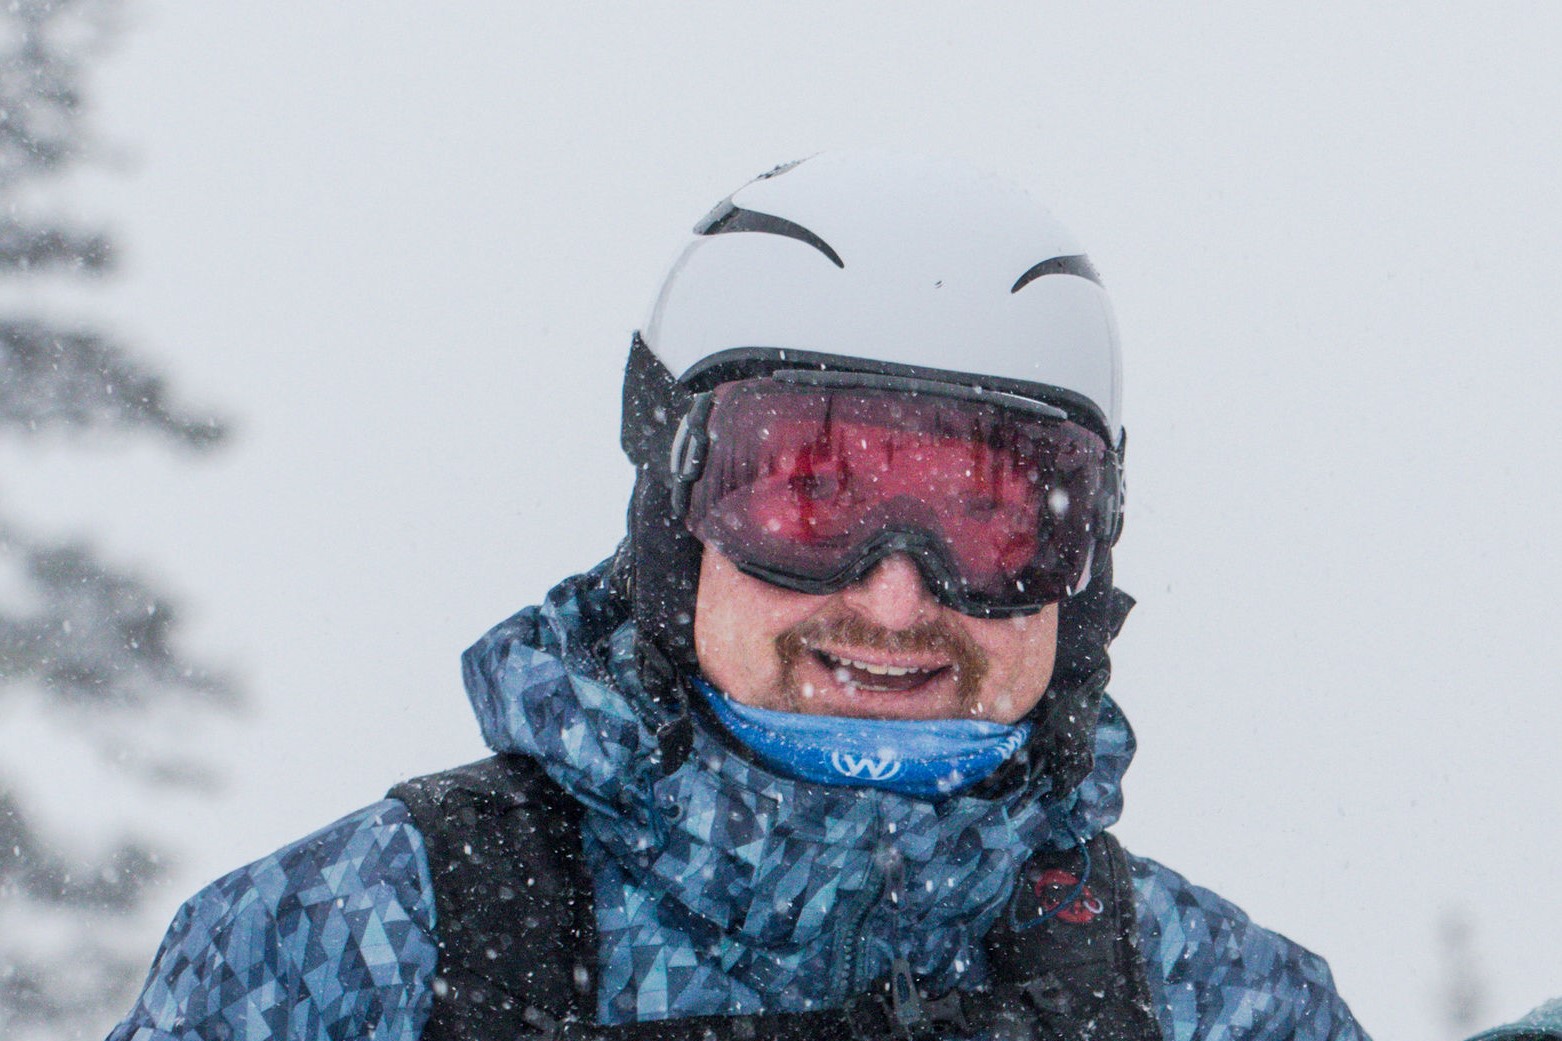 Ski instructor Rick Lyon